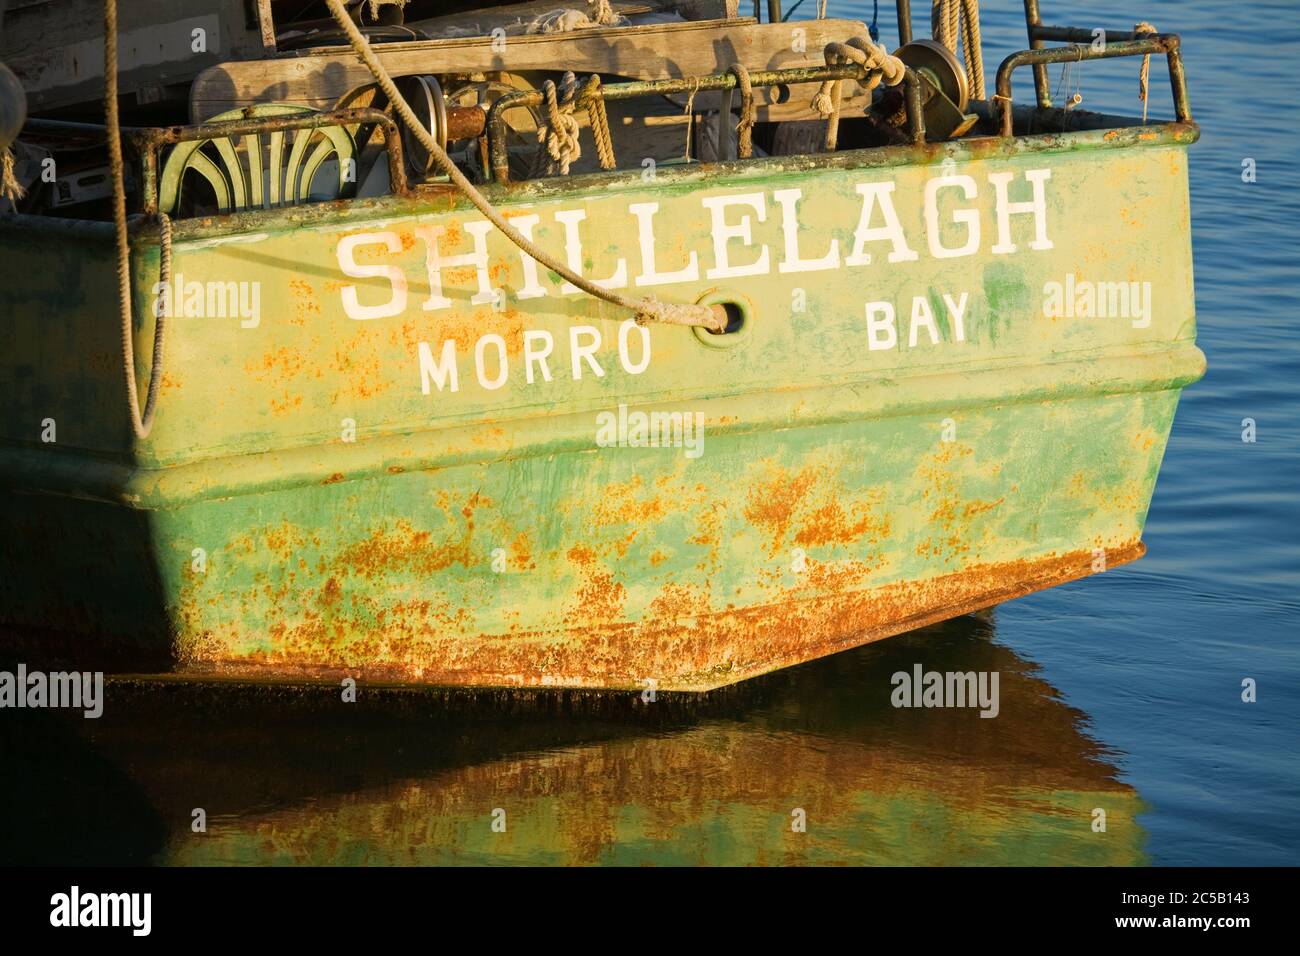 Fishing Boats,City of Morro Bay,San Luis Obispo County,California,USA Stock Photo